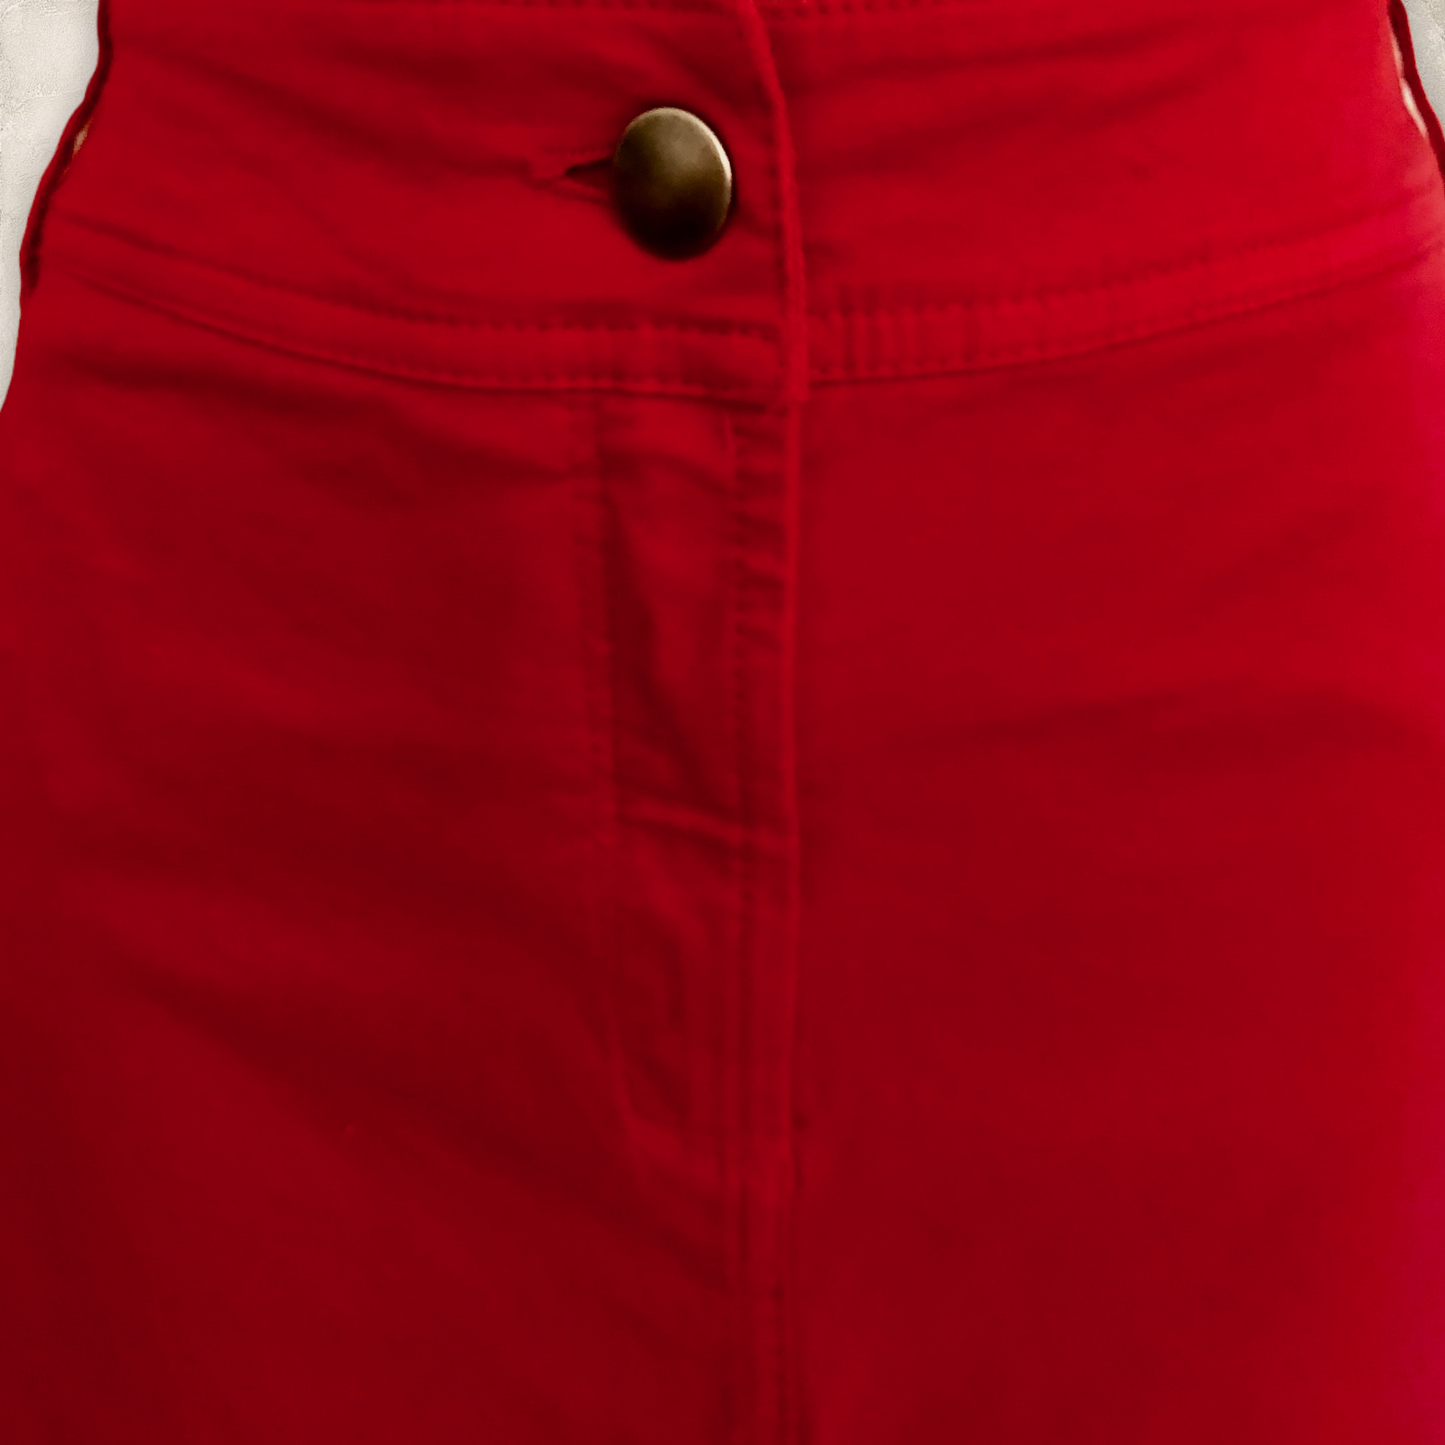 Pomodoro Womens Red Cotton Pencil Skirt UK 18 US 14 EU 46 Timeless Fashions